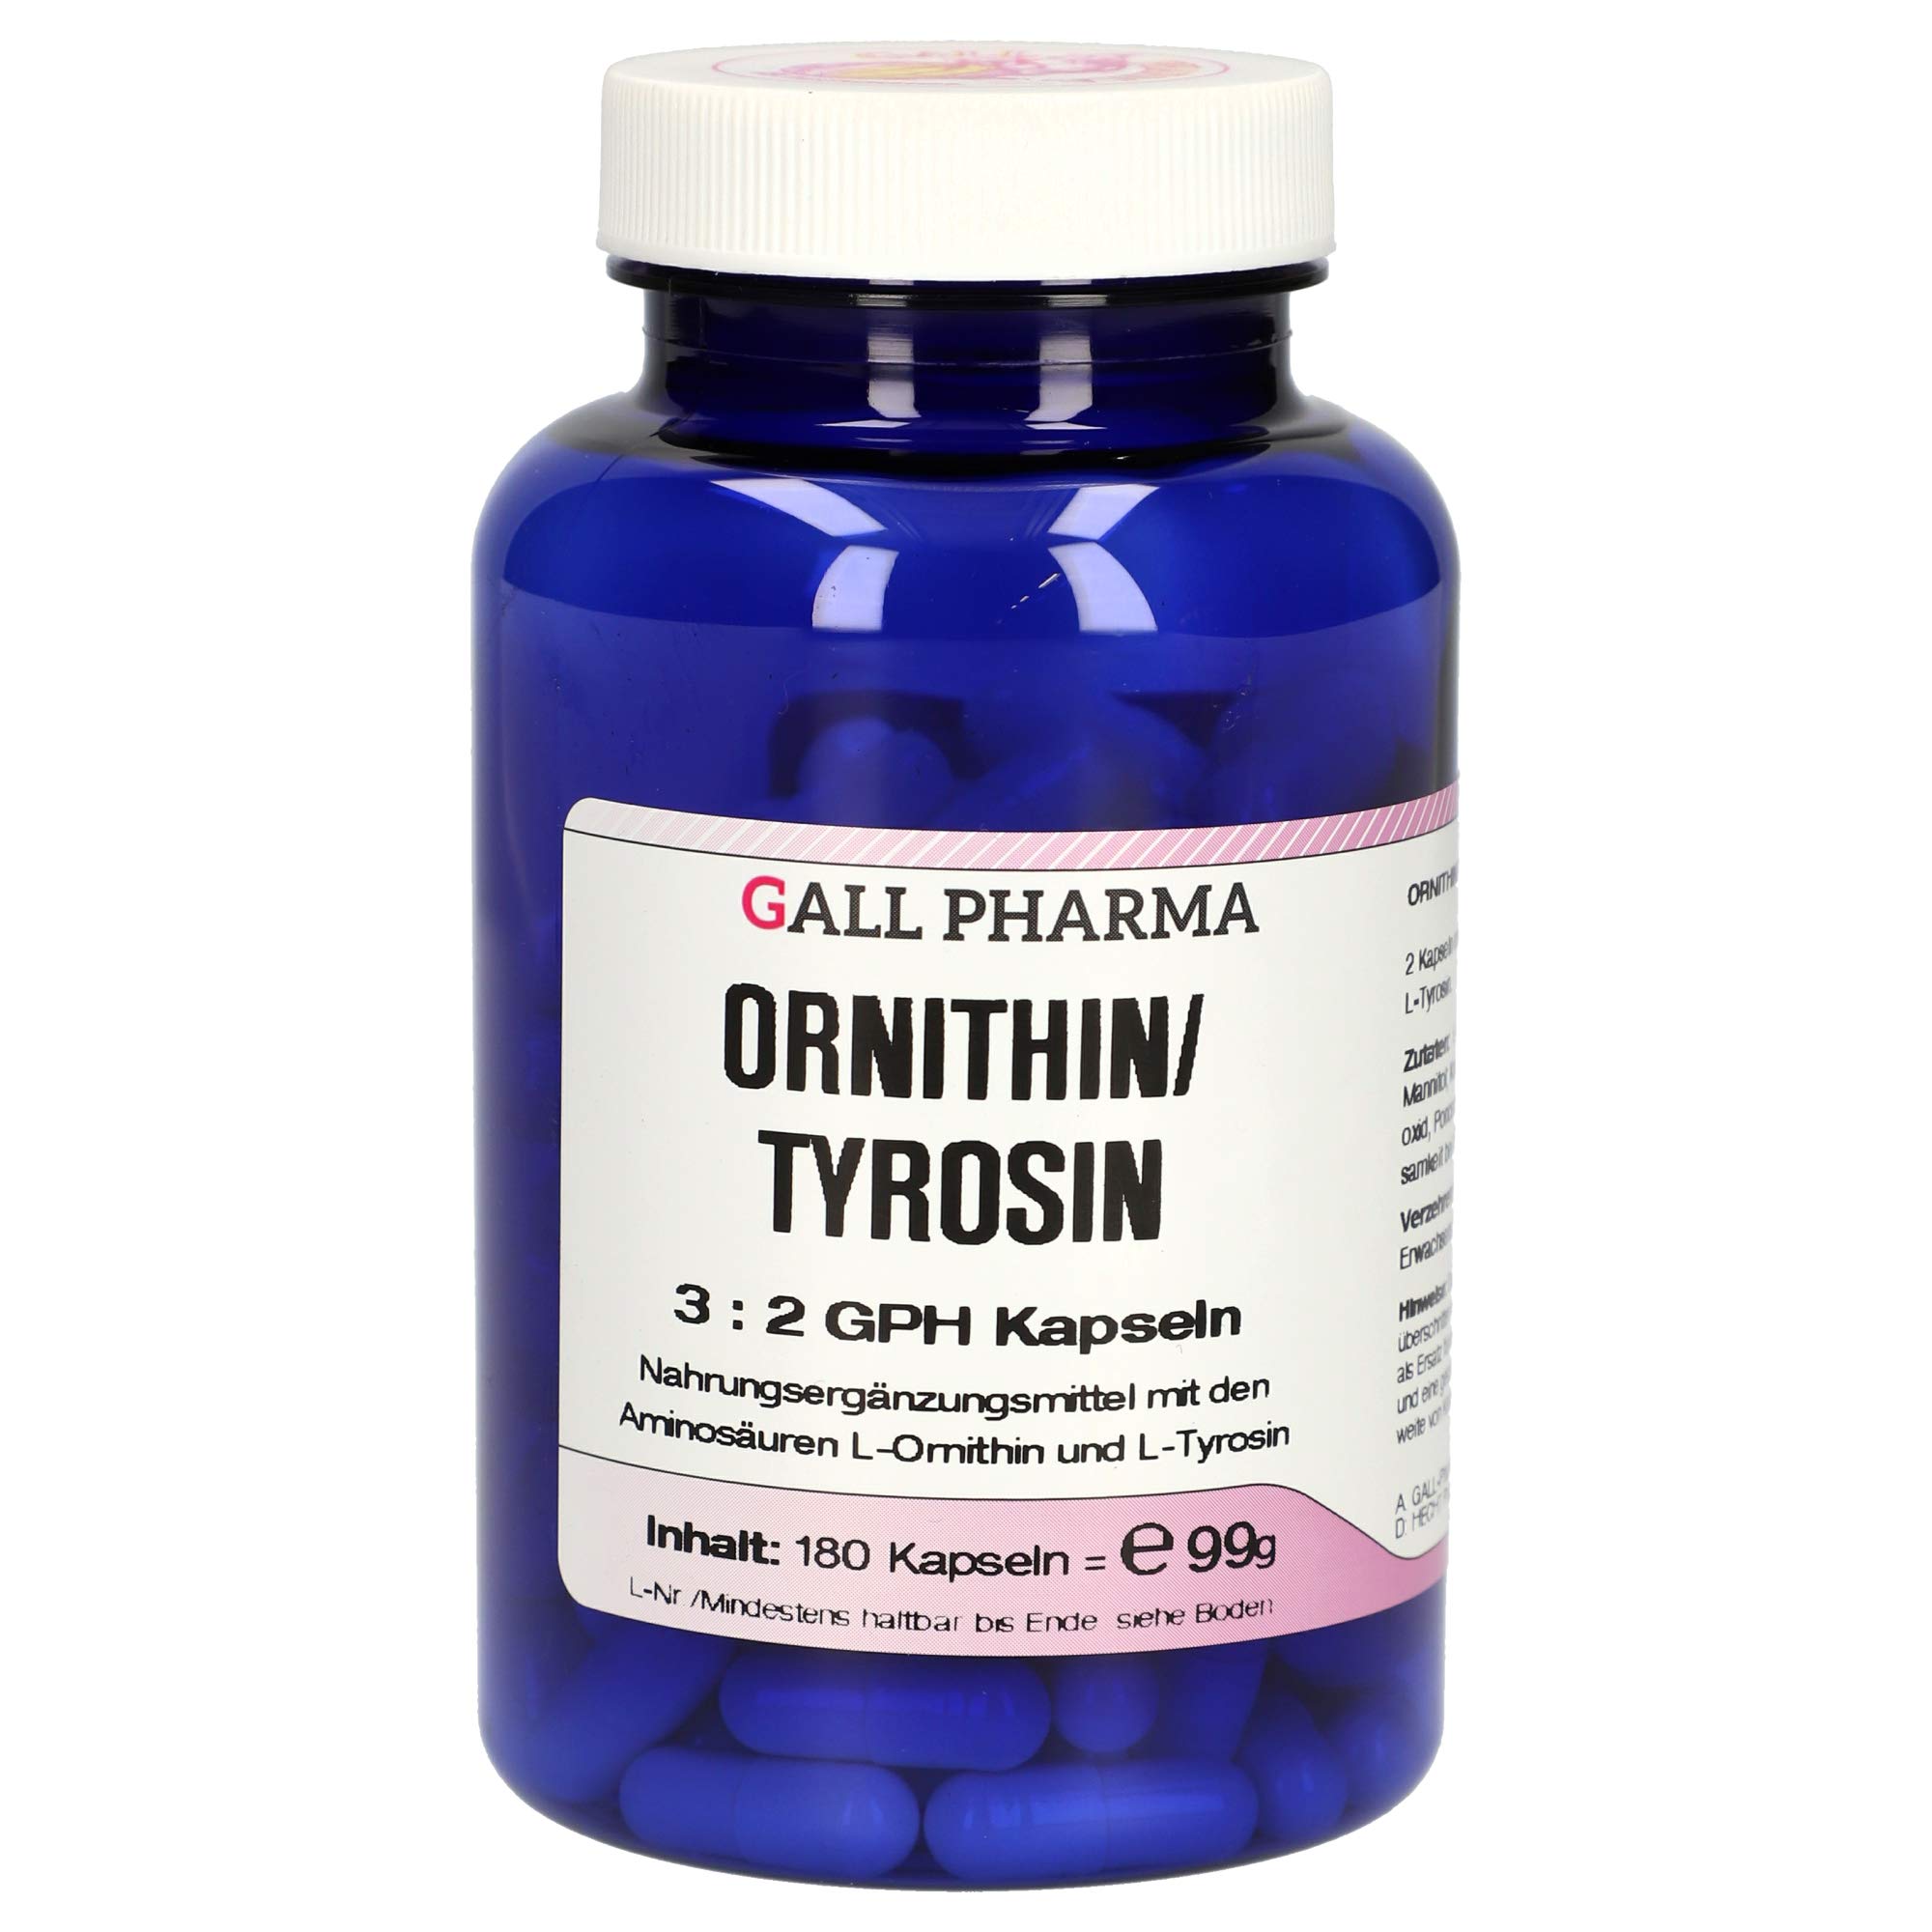 Gall Pharma Ornithin/Tyrosin 3:2 GPH Kapseln 180 Stück